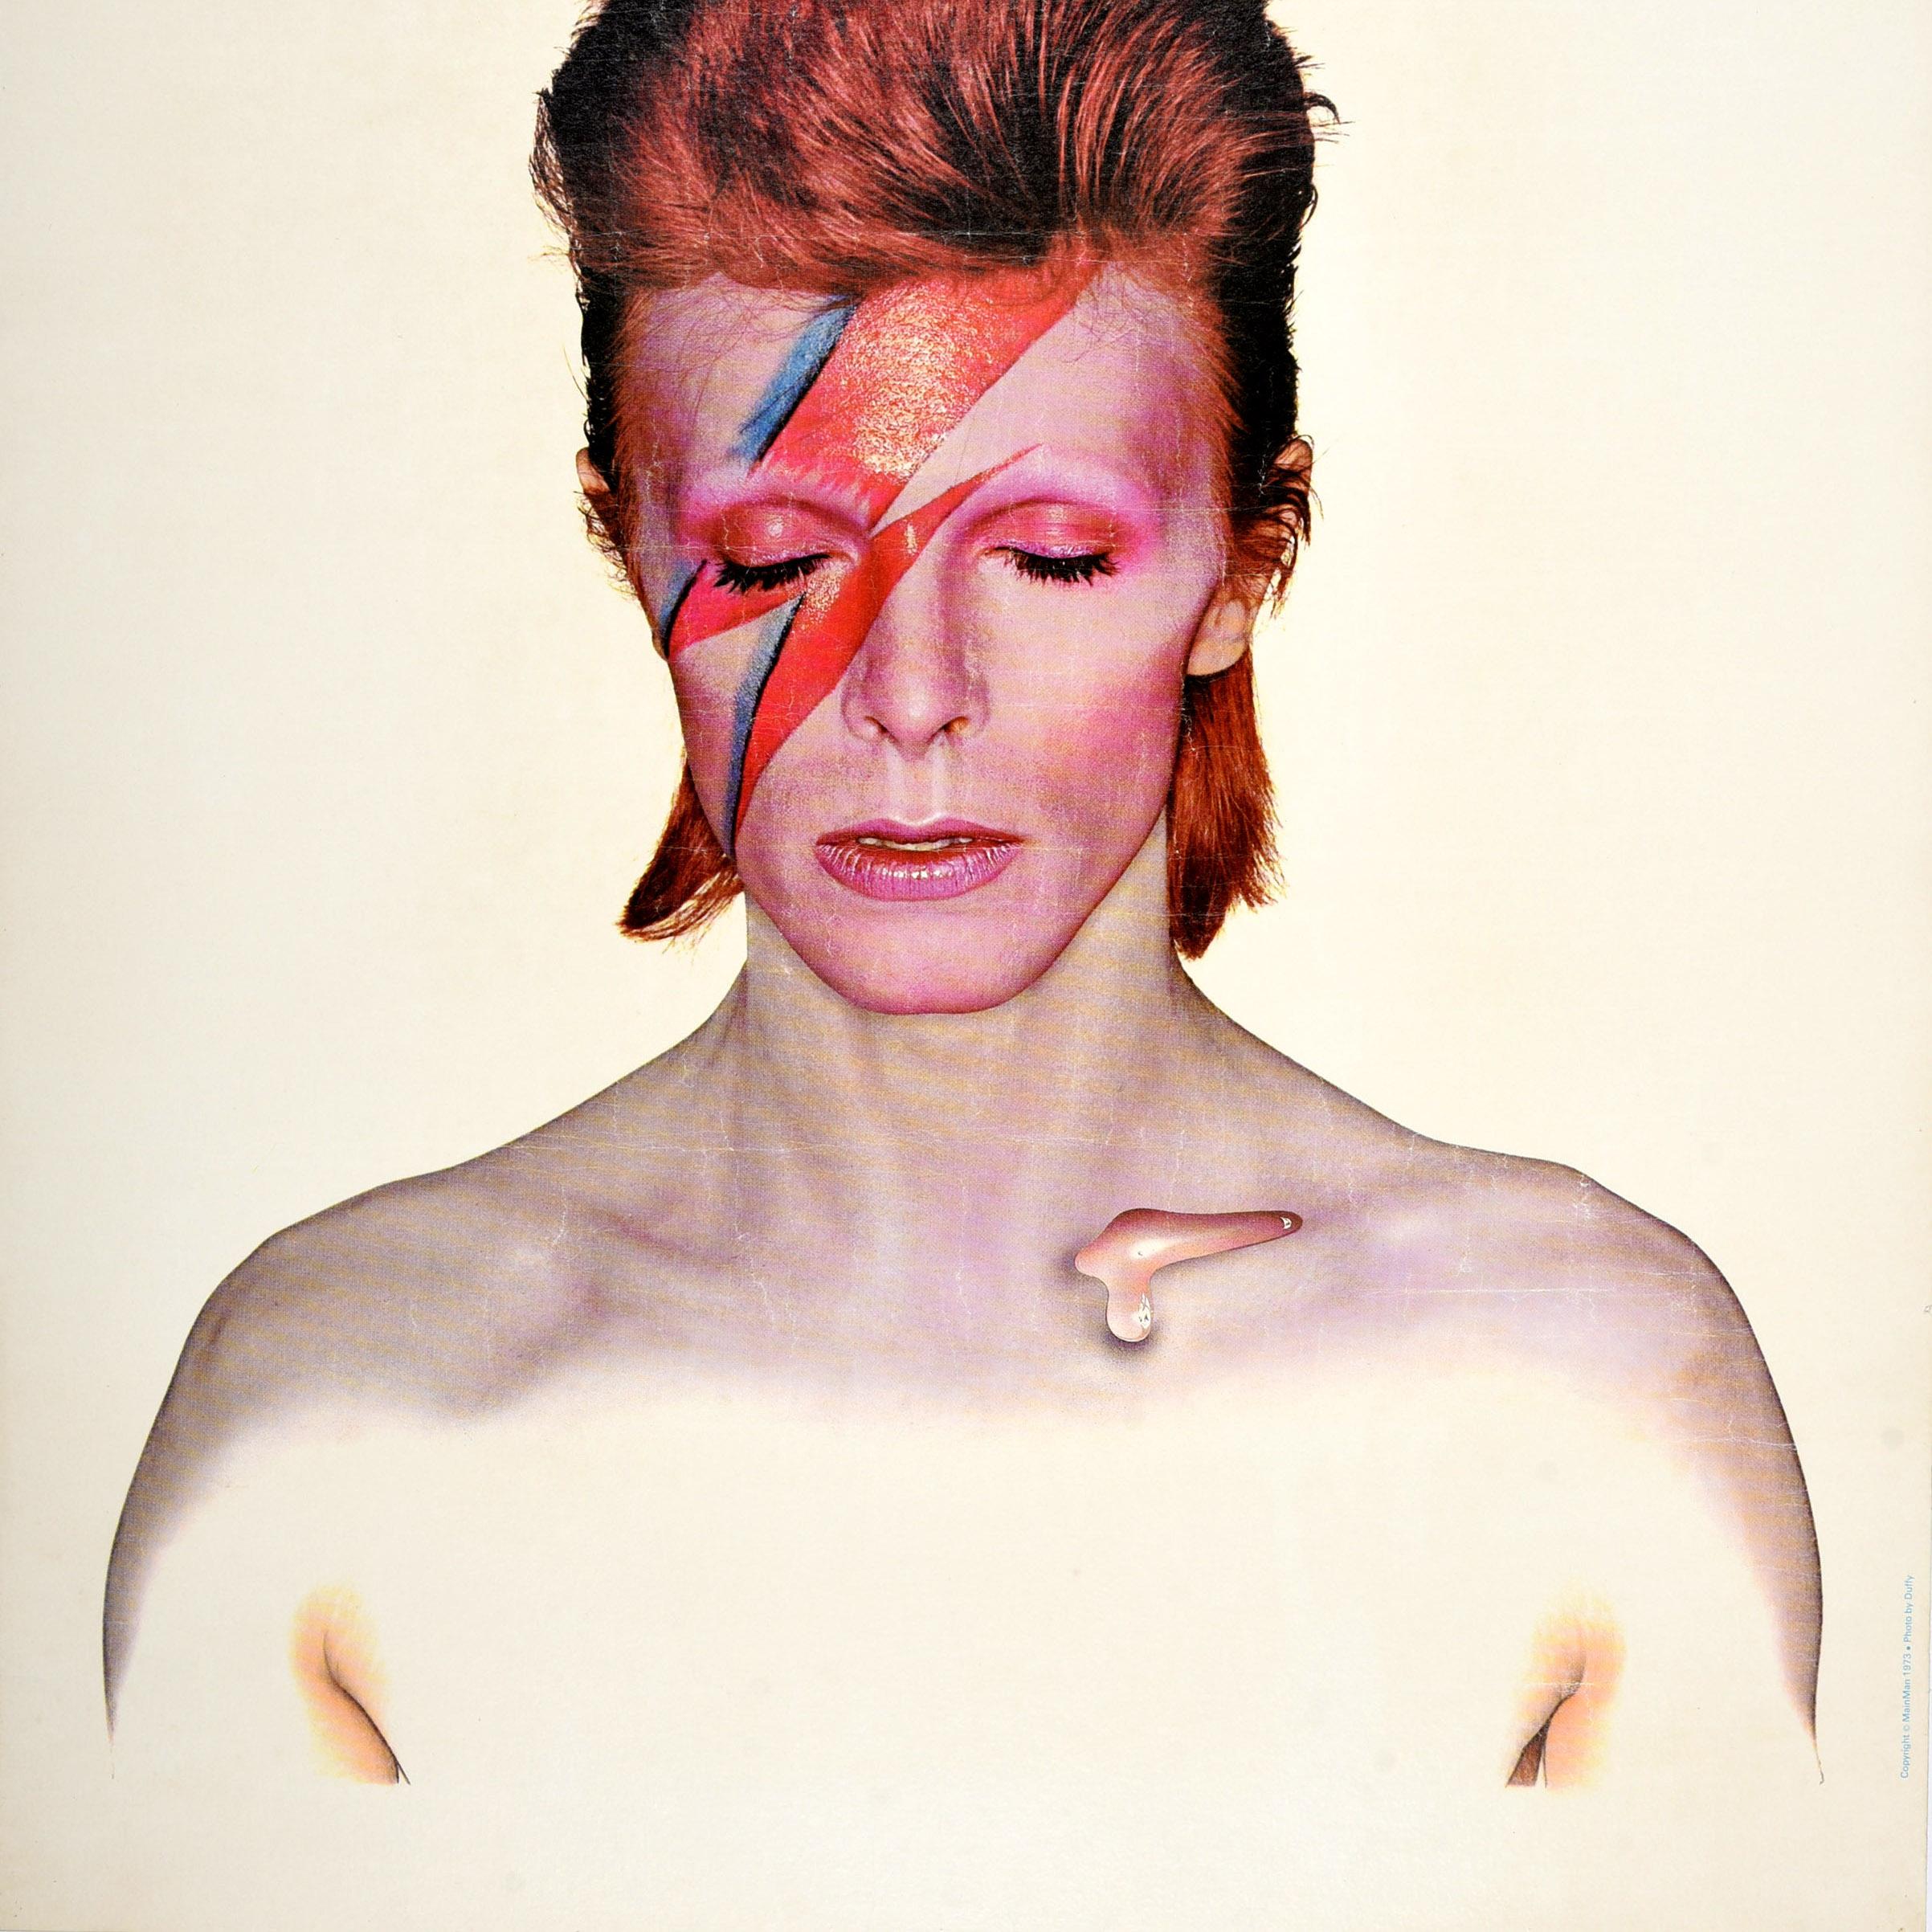 Original Vintage Music Advertising Poster David Bowie Aladdin Sane Glam Rock Art 1